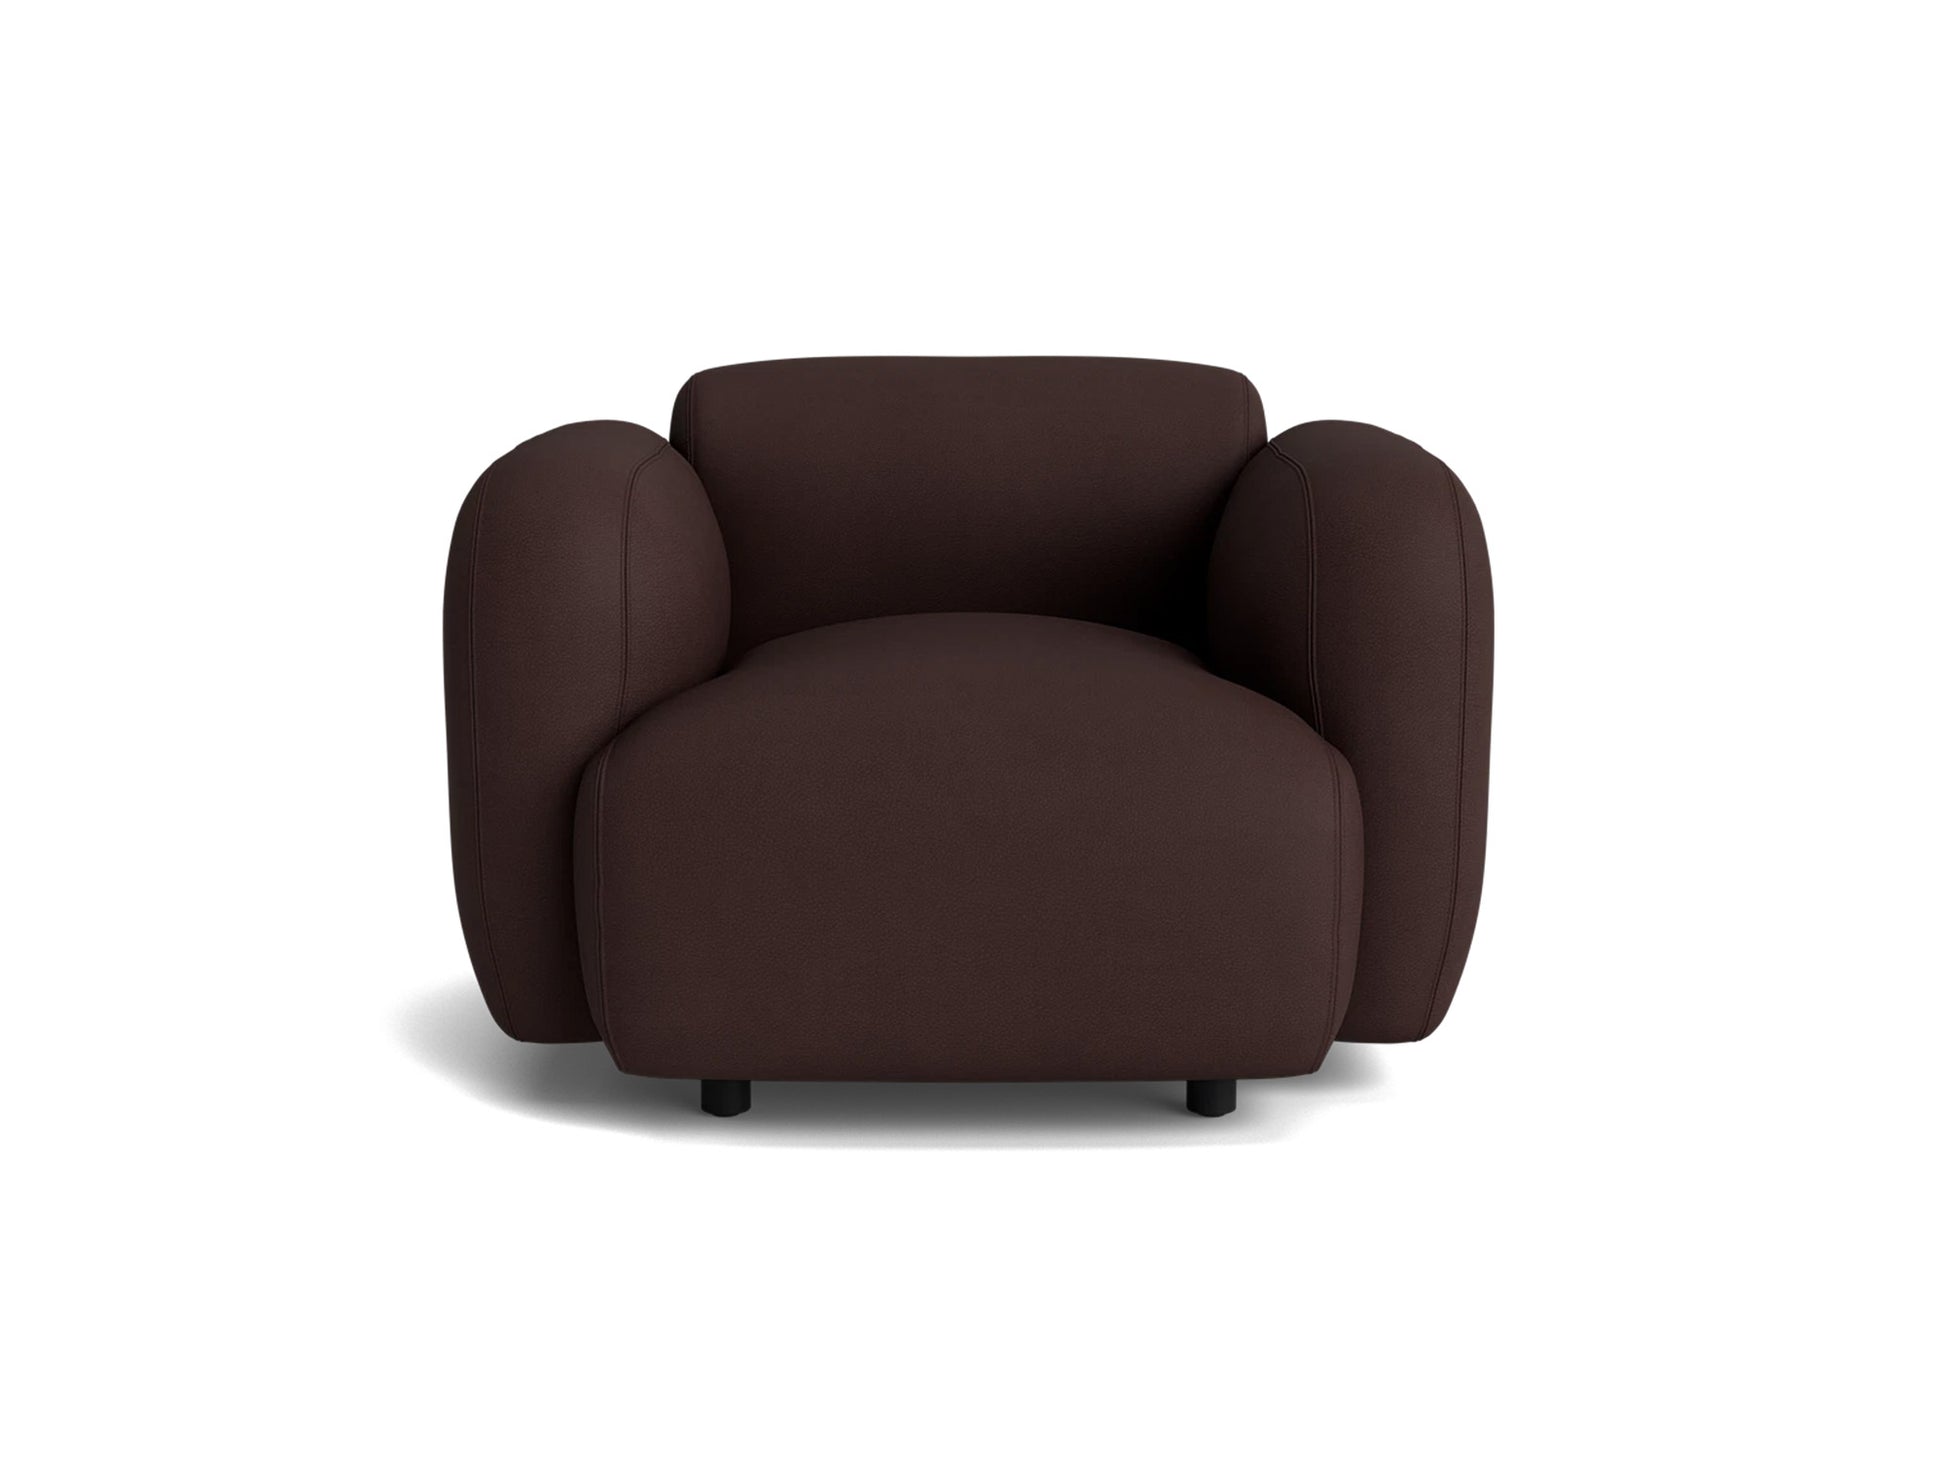 Swell Armchair by Normann Copenhagen - Ultra Leather 41589 